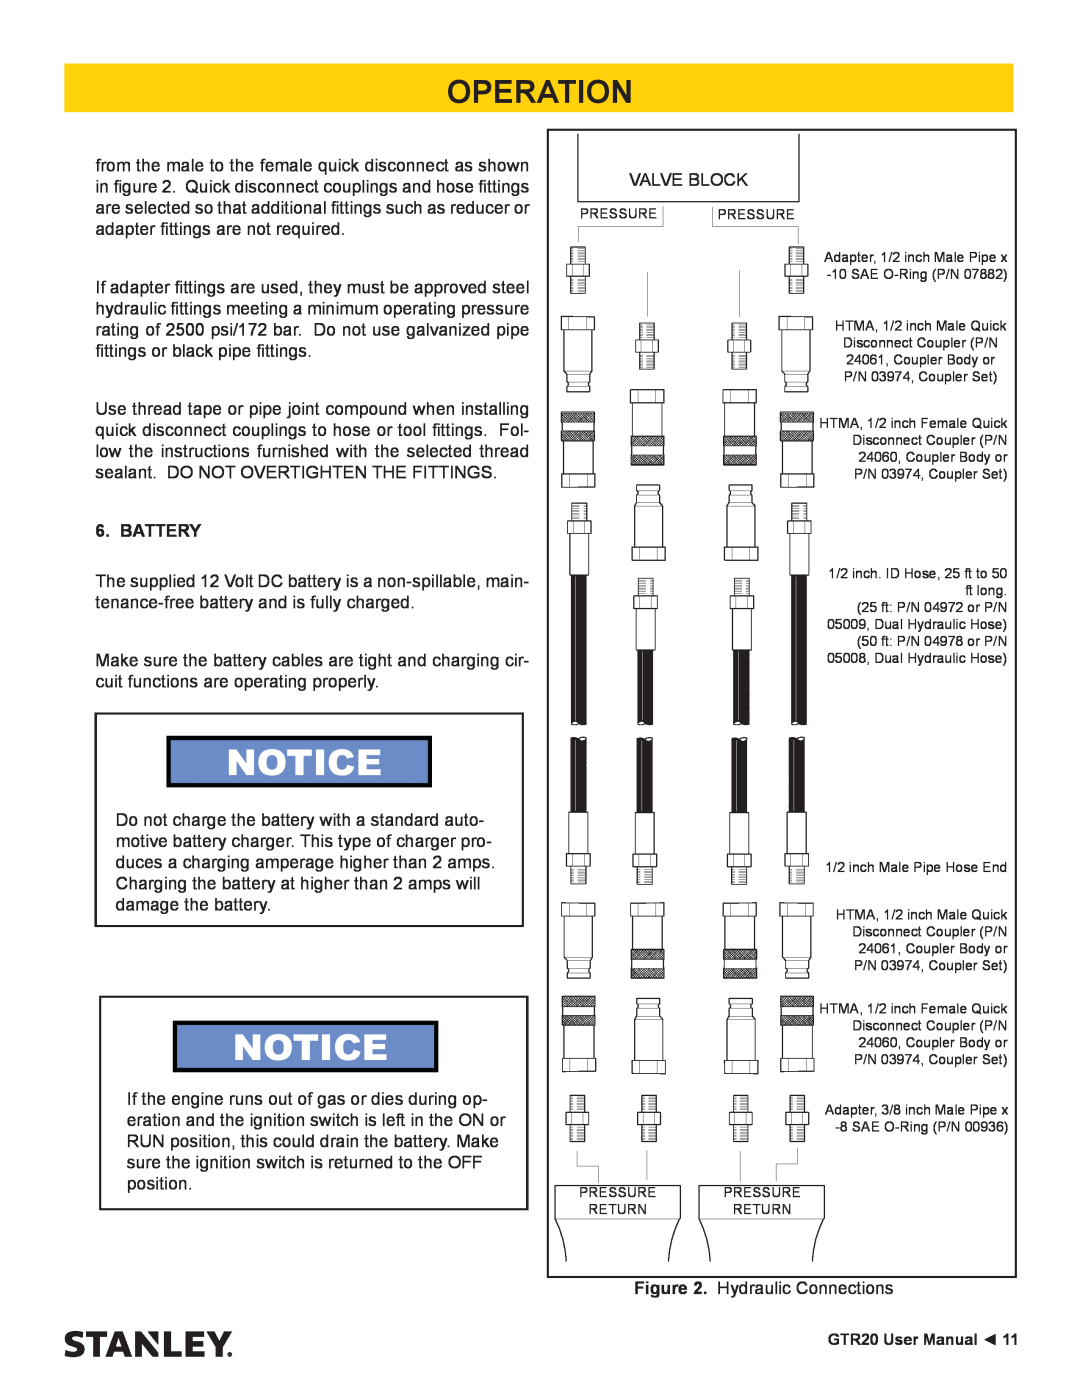 Stanley Black & Decker GTR20 user manual Operation, Battery 